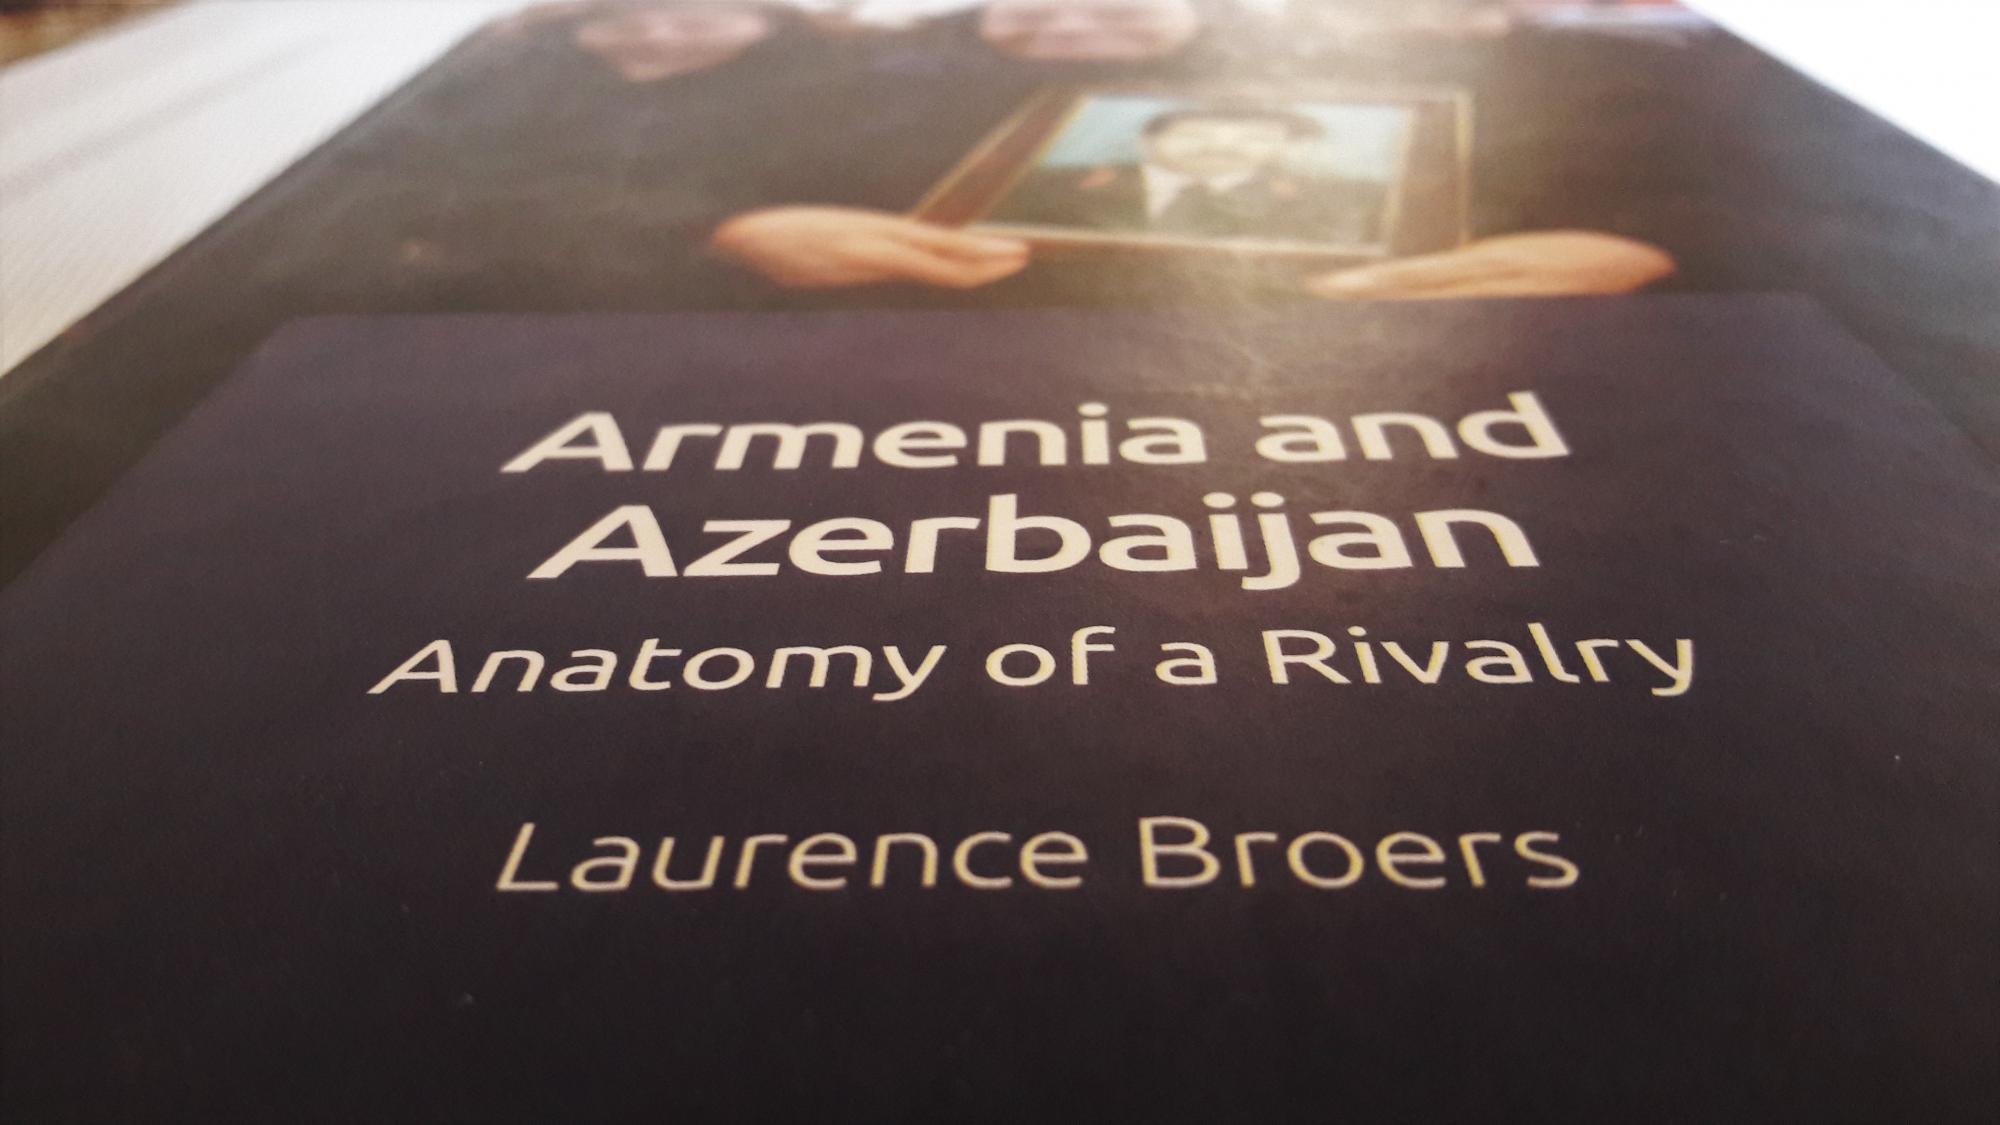 Armenia and Azerbaijan: Anatomy of a Rivalry: A Book Review